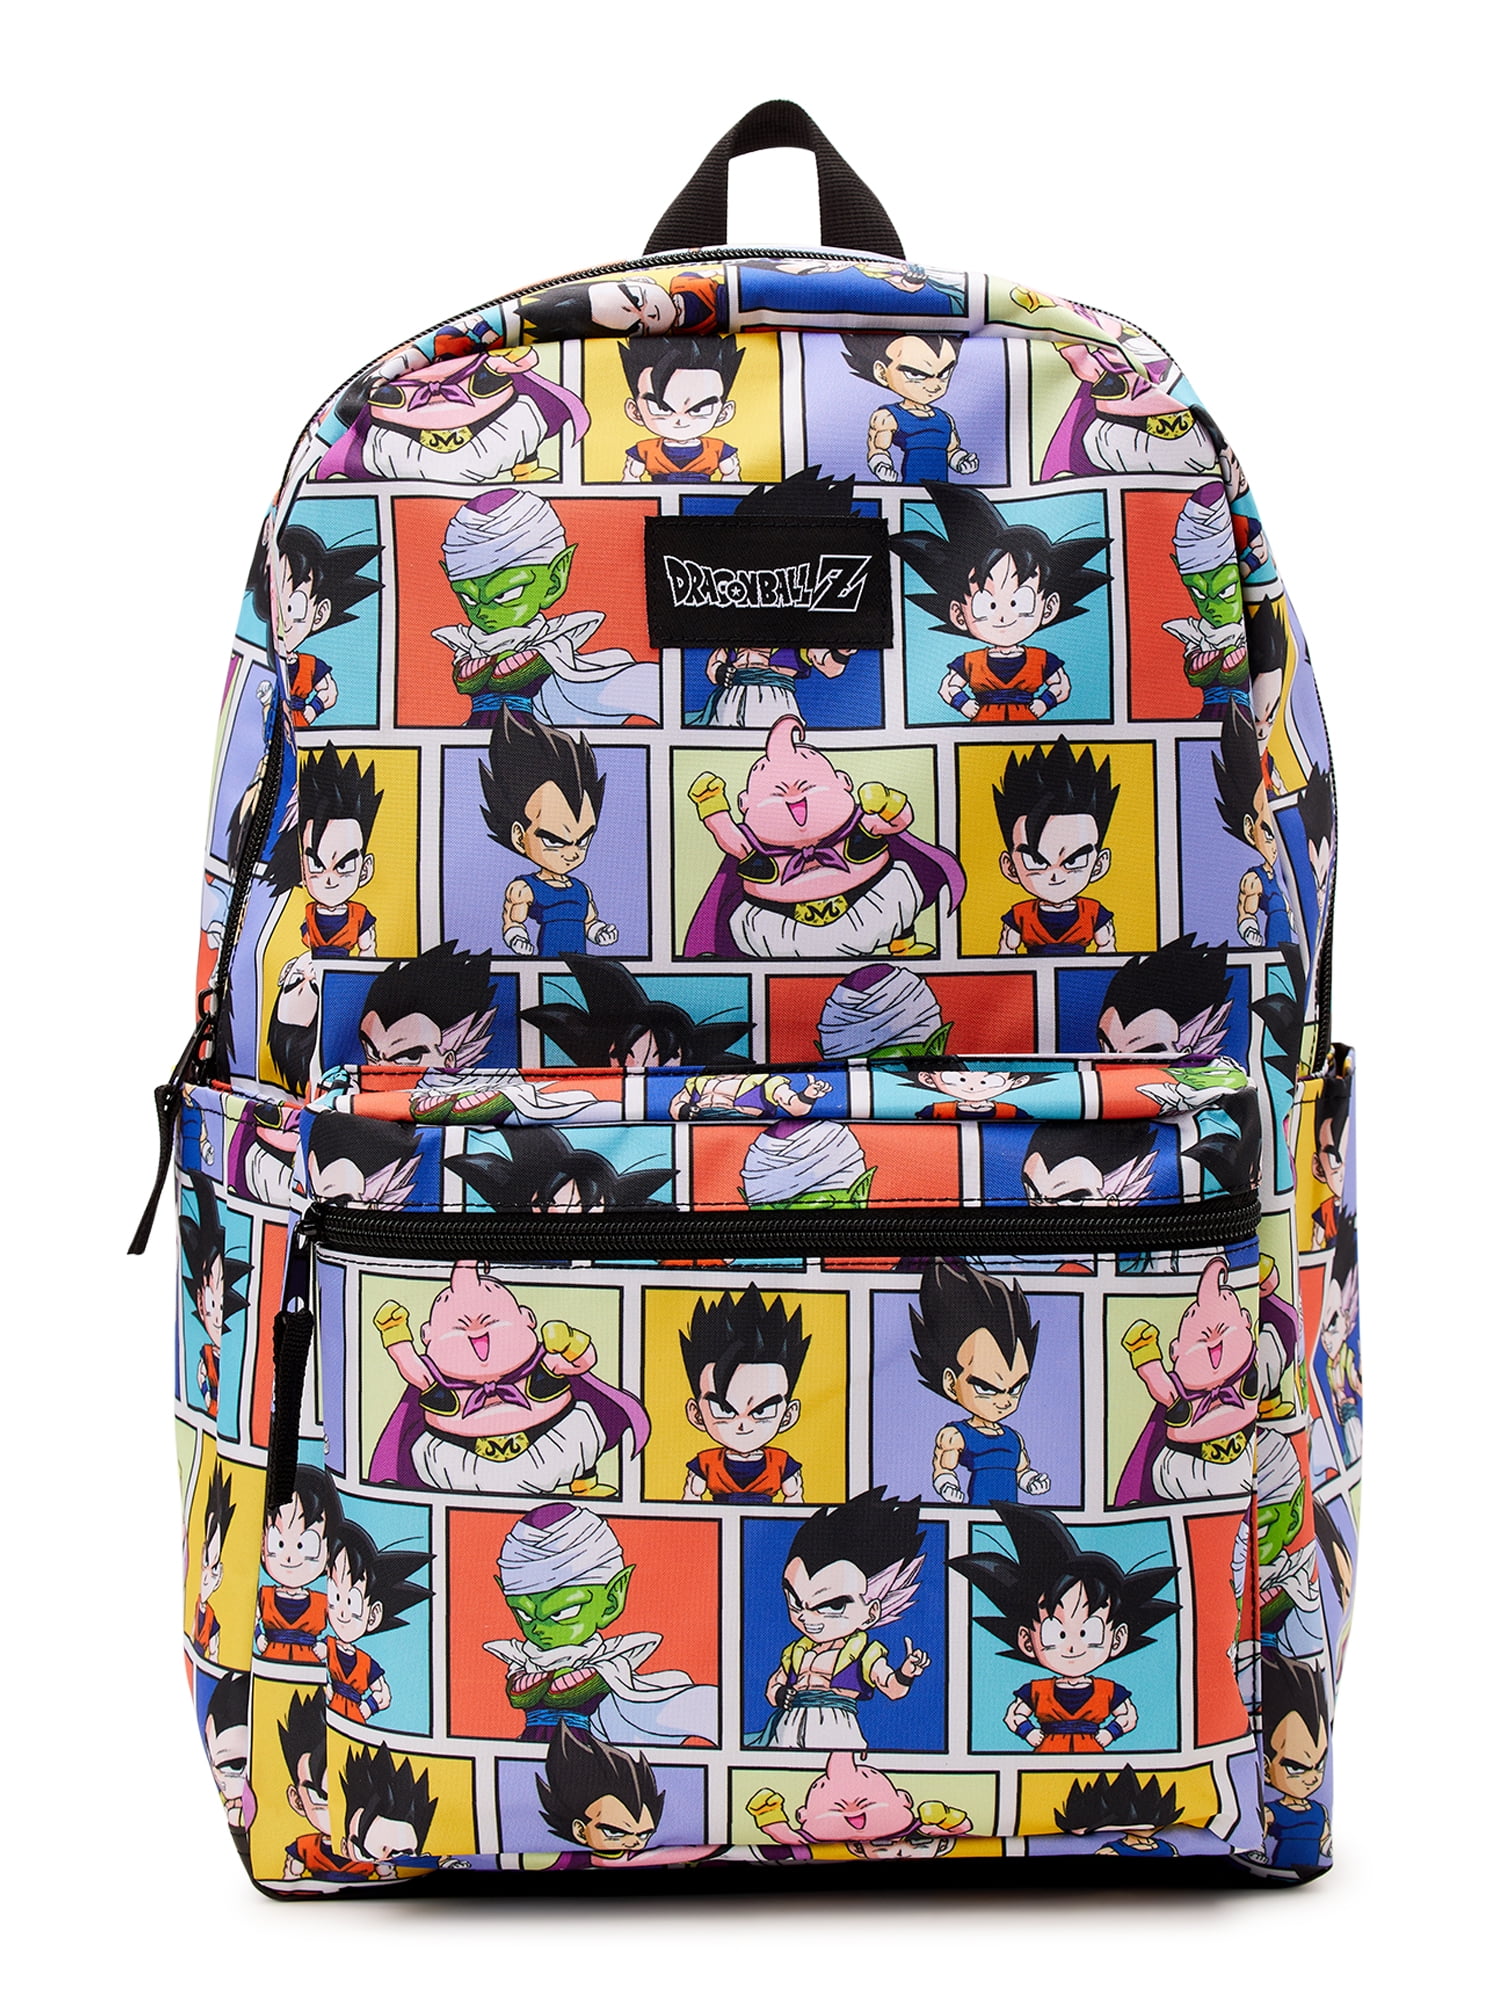 Dragon Ball Z Backpack 4 Piece Set Goku Lunch Box Water Bottle Pencil Case